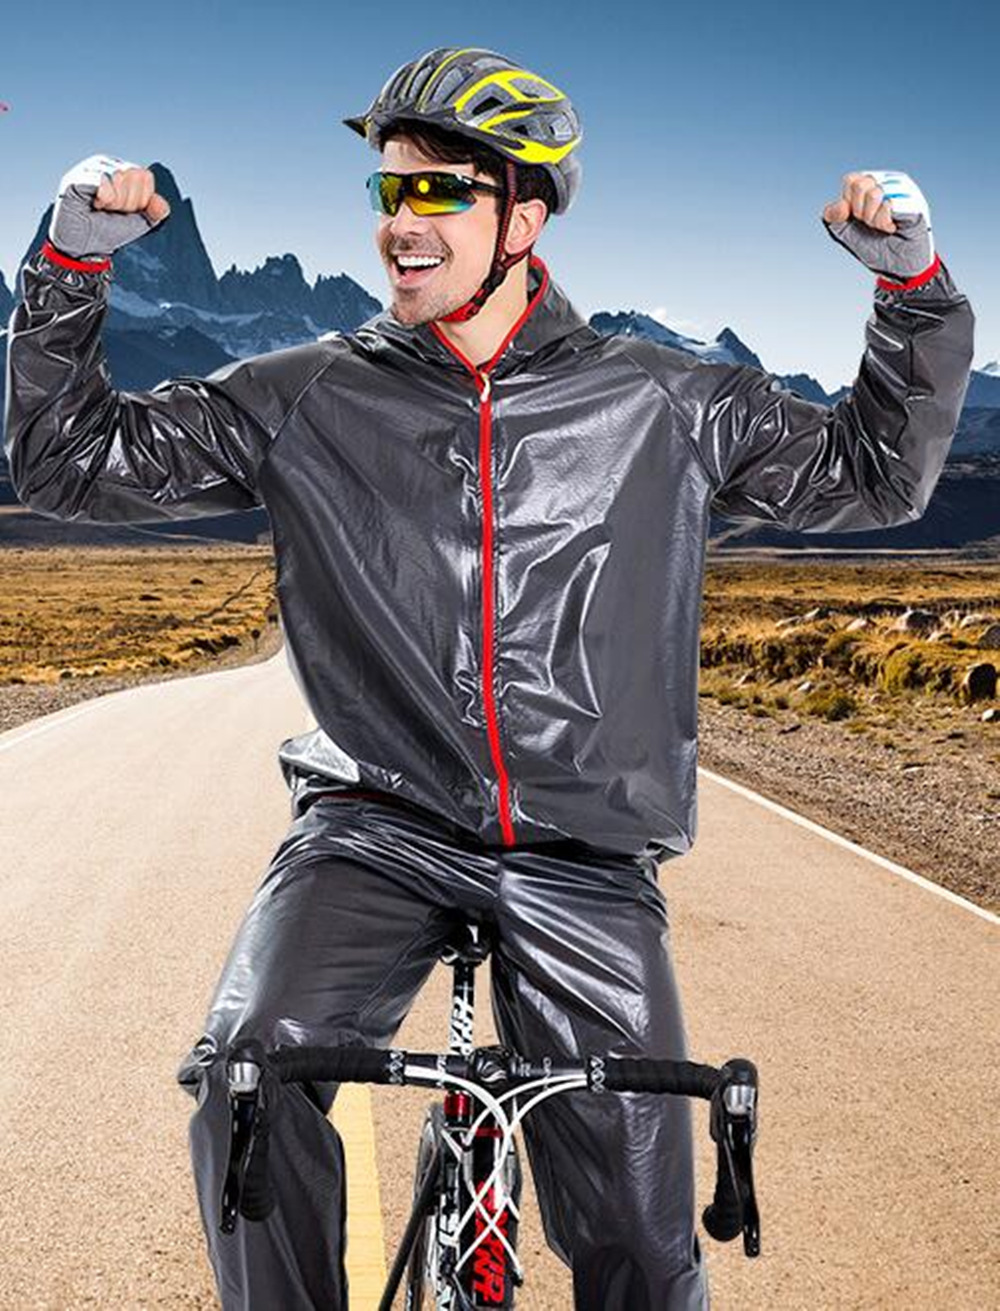 Outdoor Sports Bike Cycling Raincoat Detachable Coat + Pants